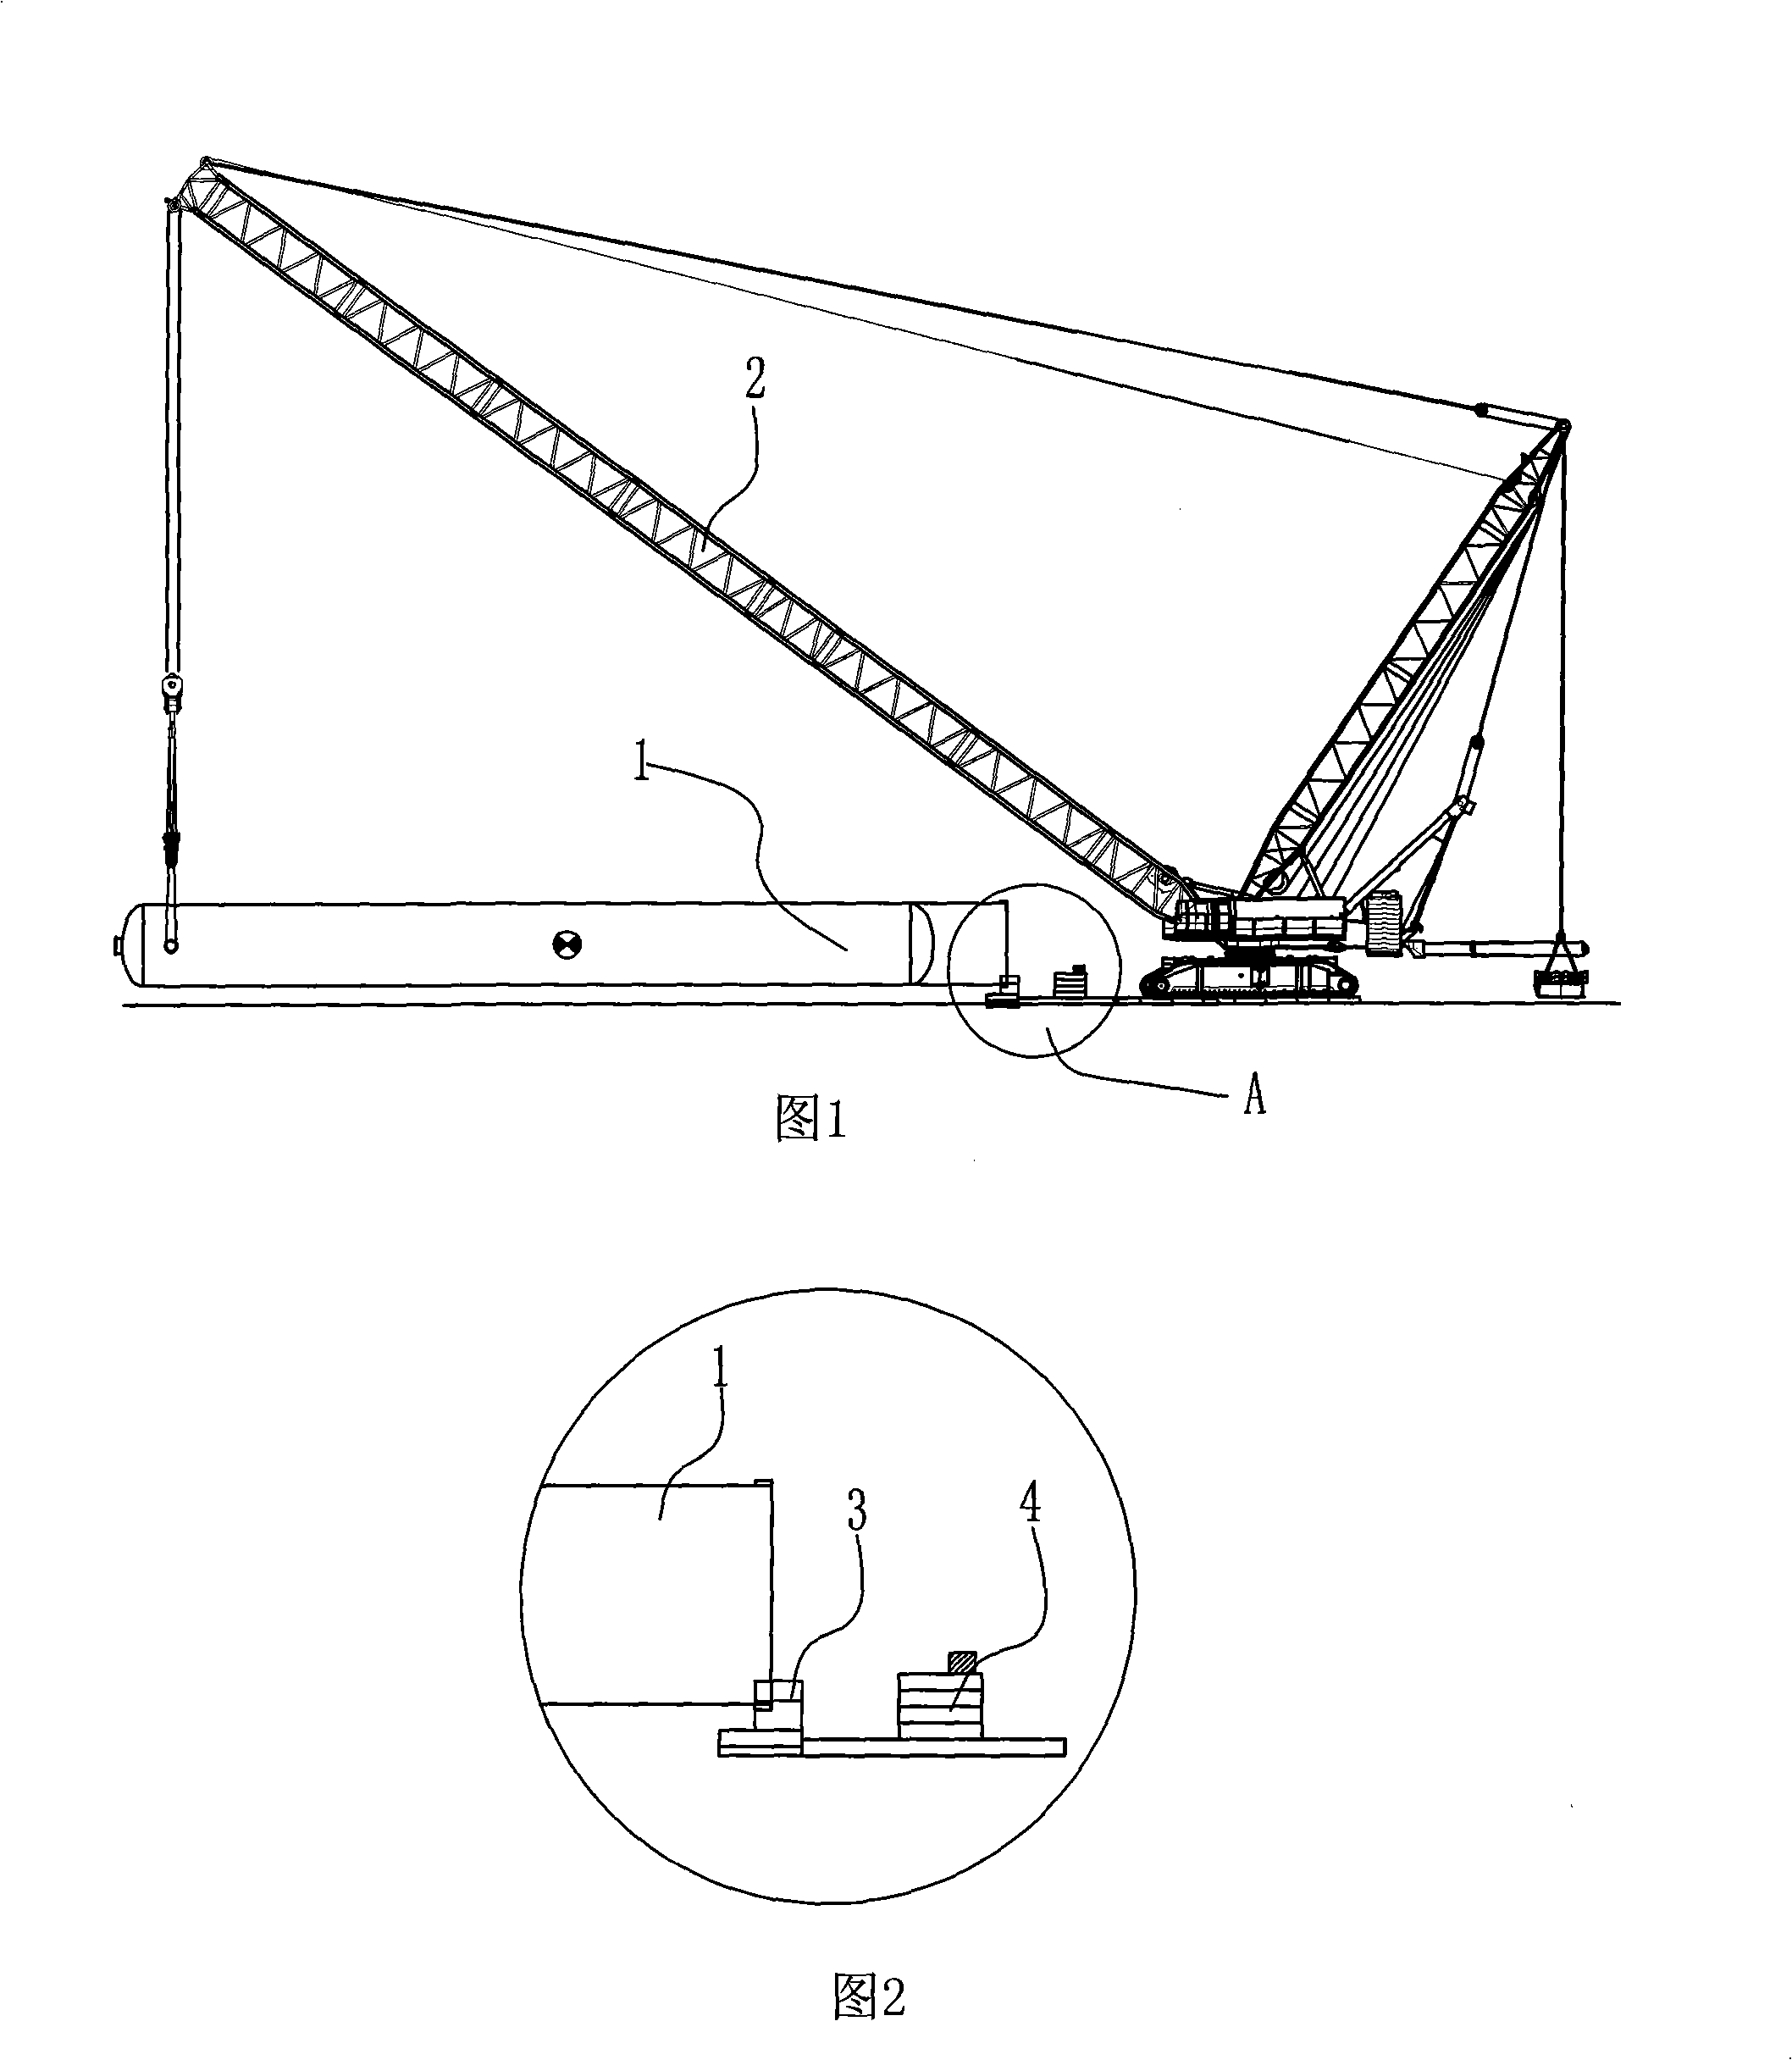 Turning hoisting method for vertical type apparatus